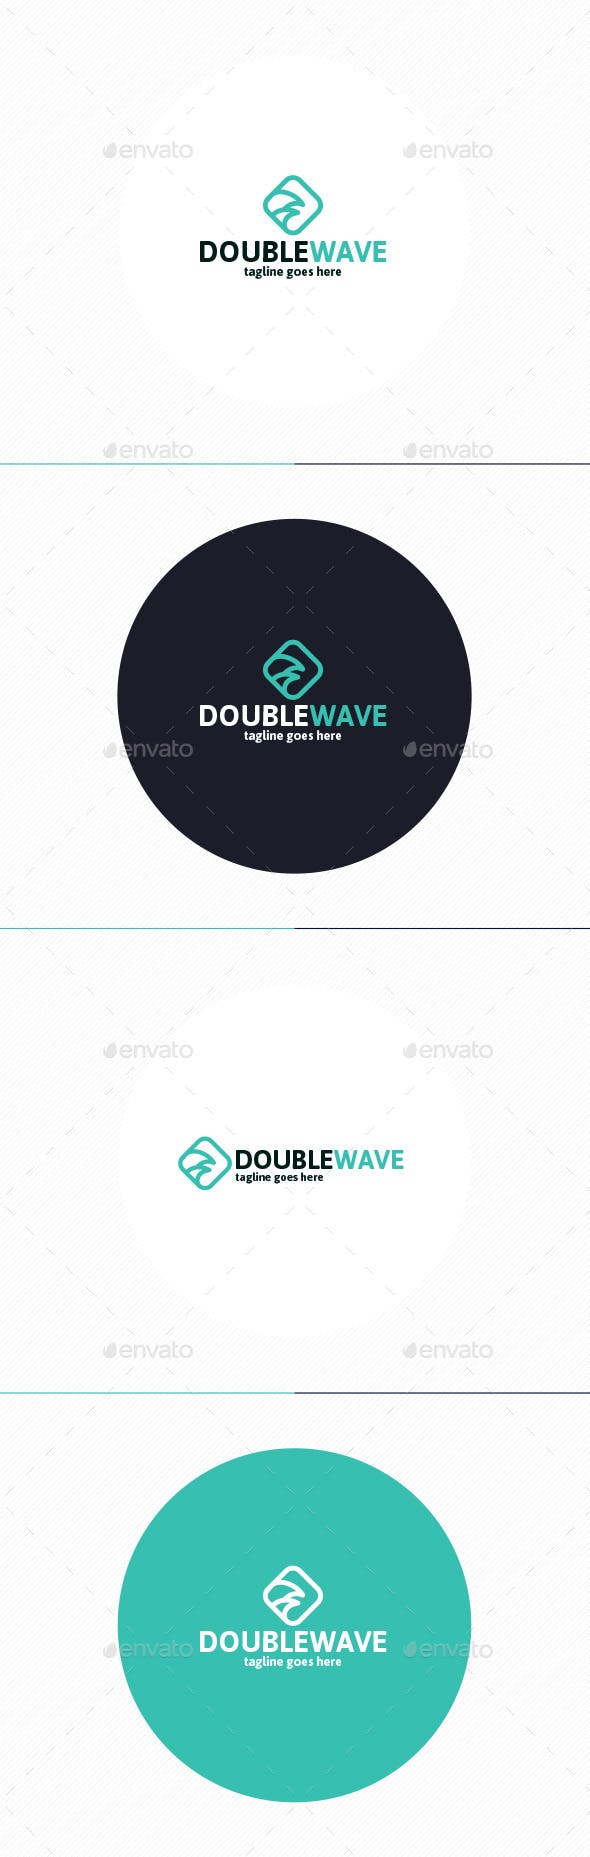 Double Wave Logo - Double Wave Logo